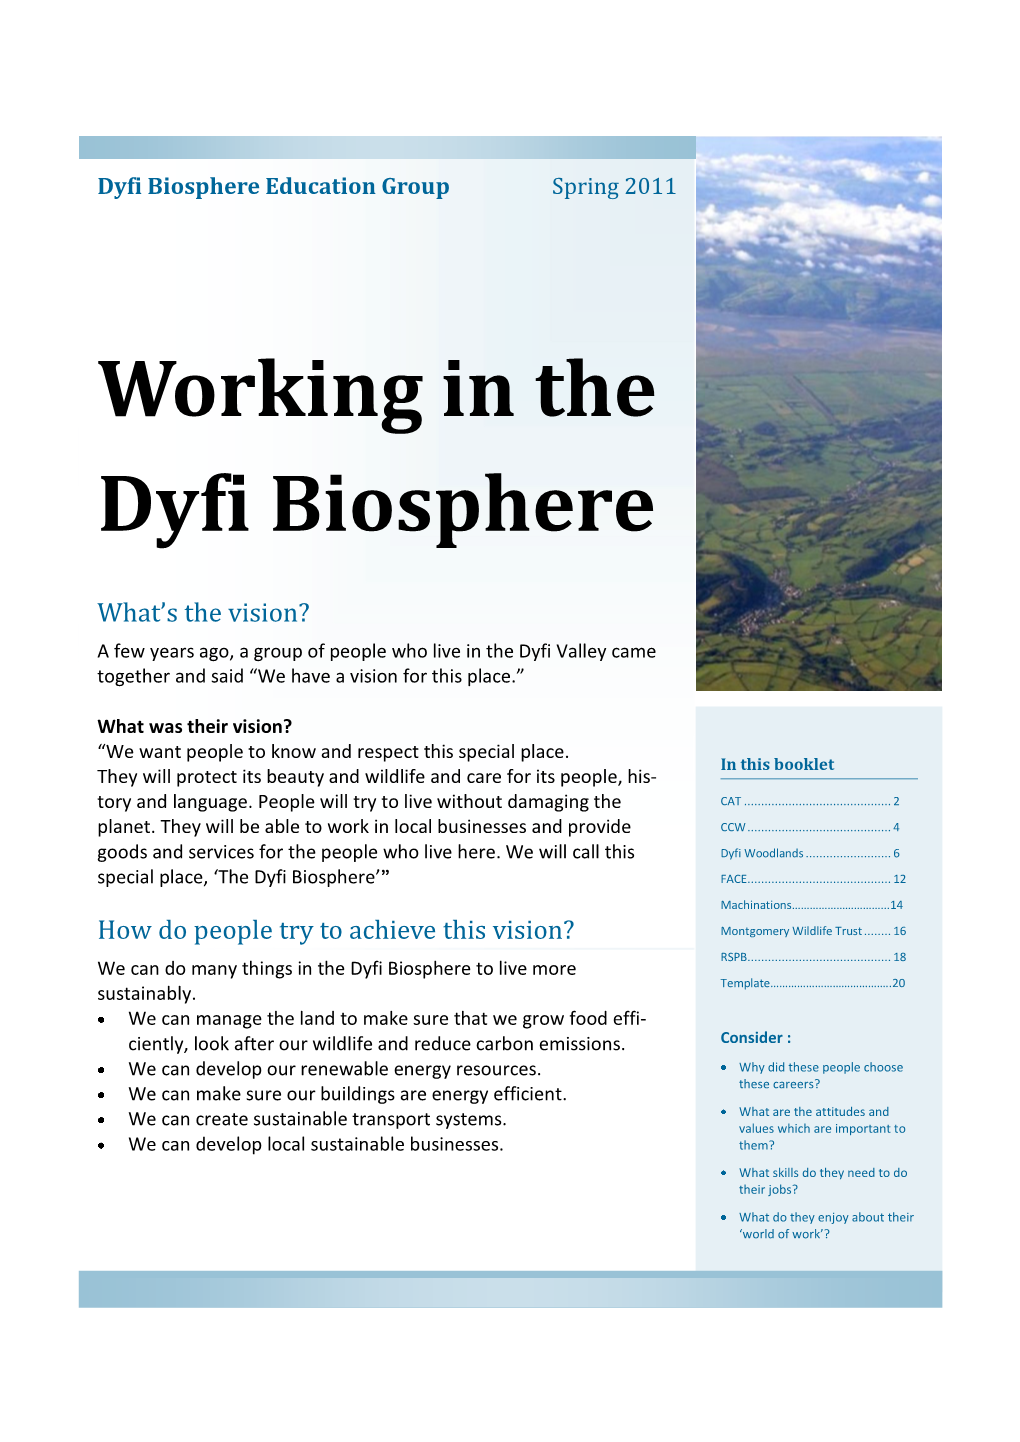 Working in the Dyfi Biosphere